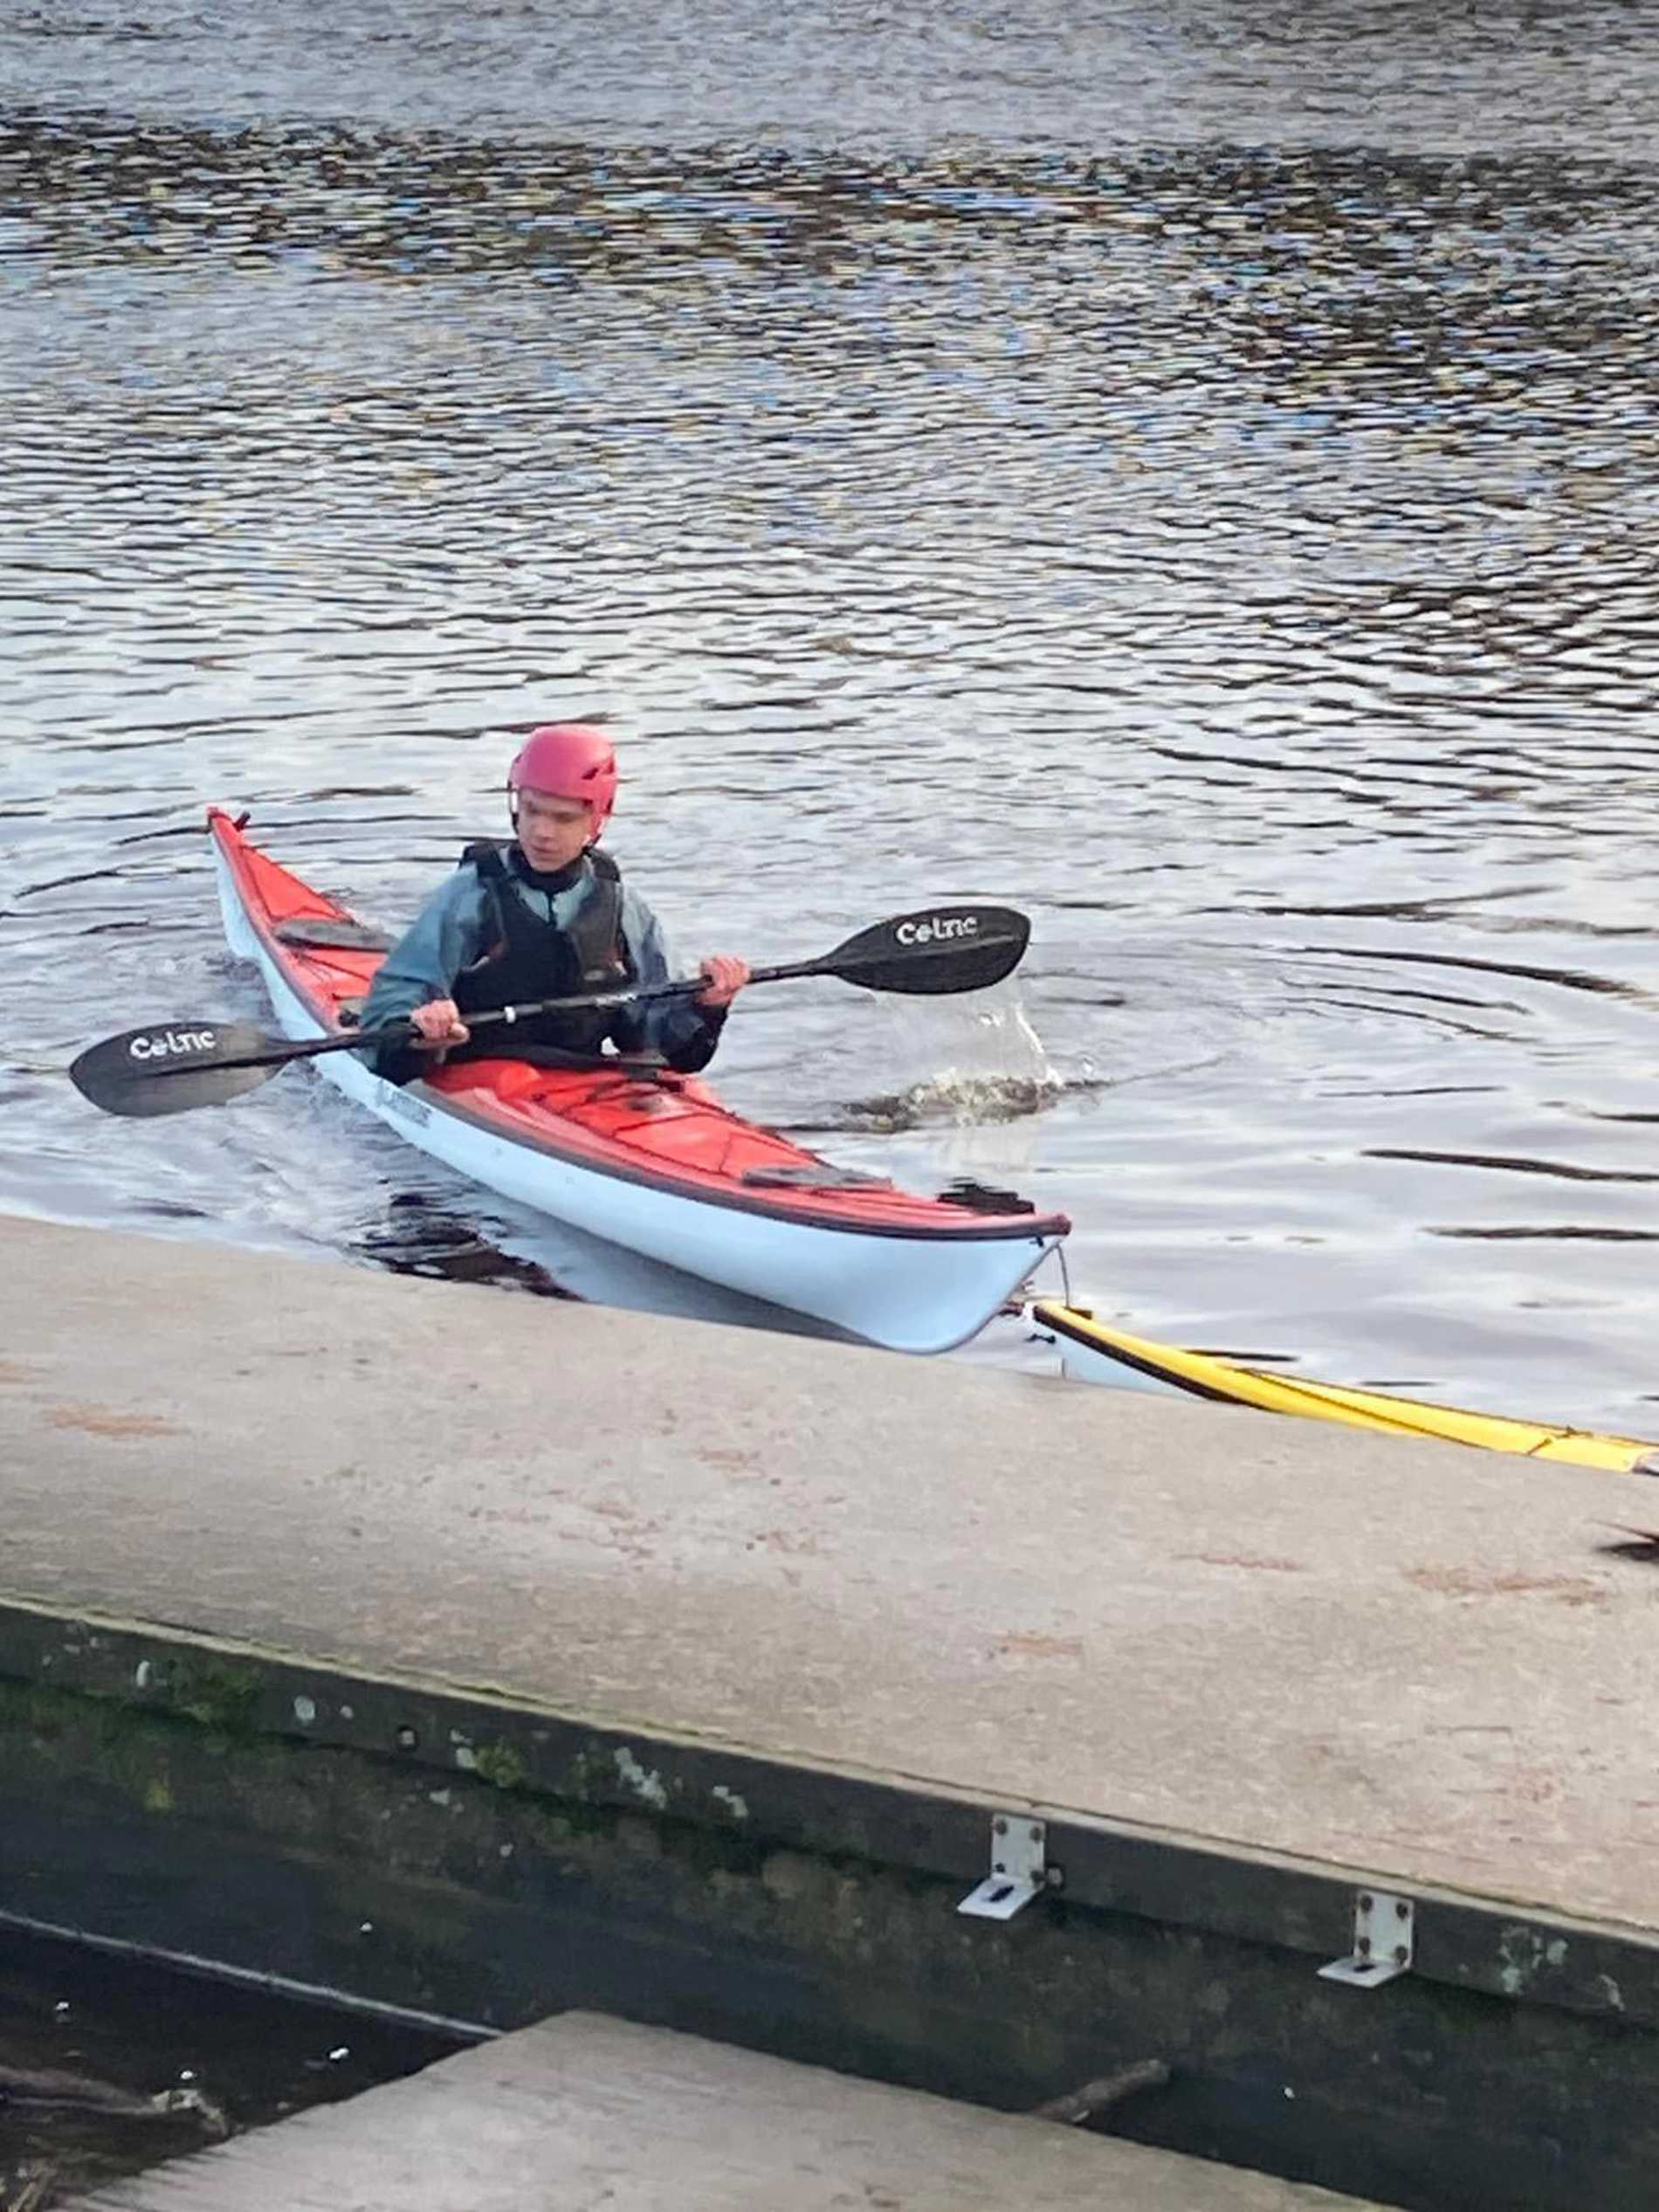 Sam paddling his new sea kayak.